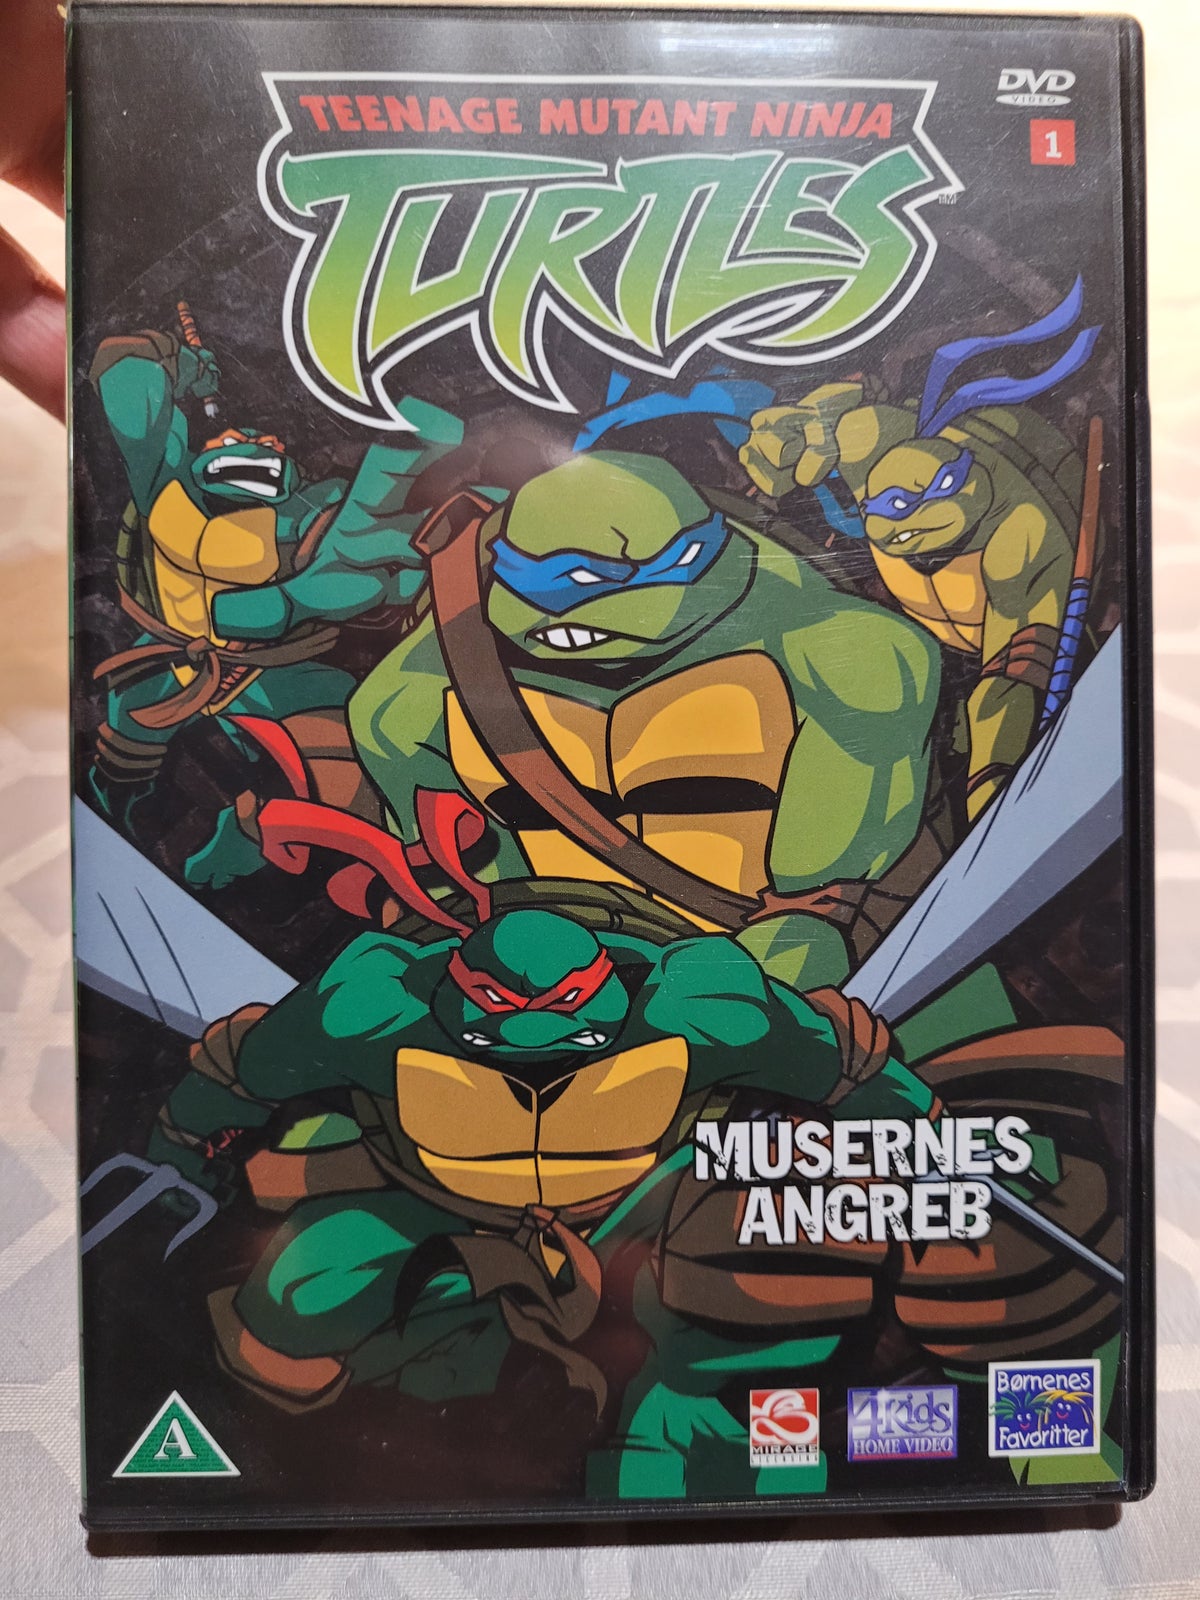 Turtles 1 Musernes angreb; Turtles 2 - Mød Casey J, DVD,